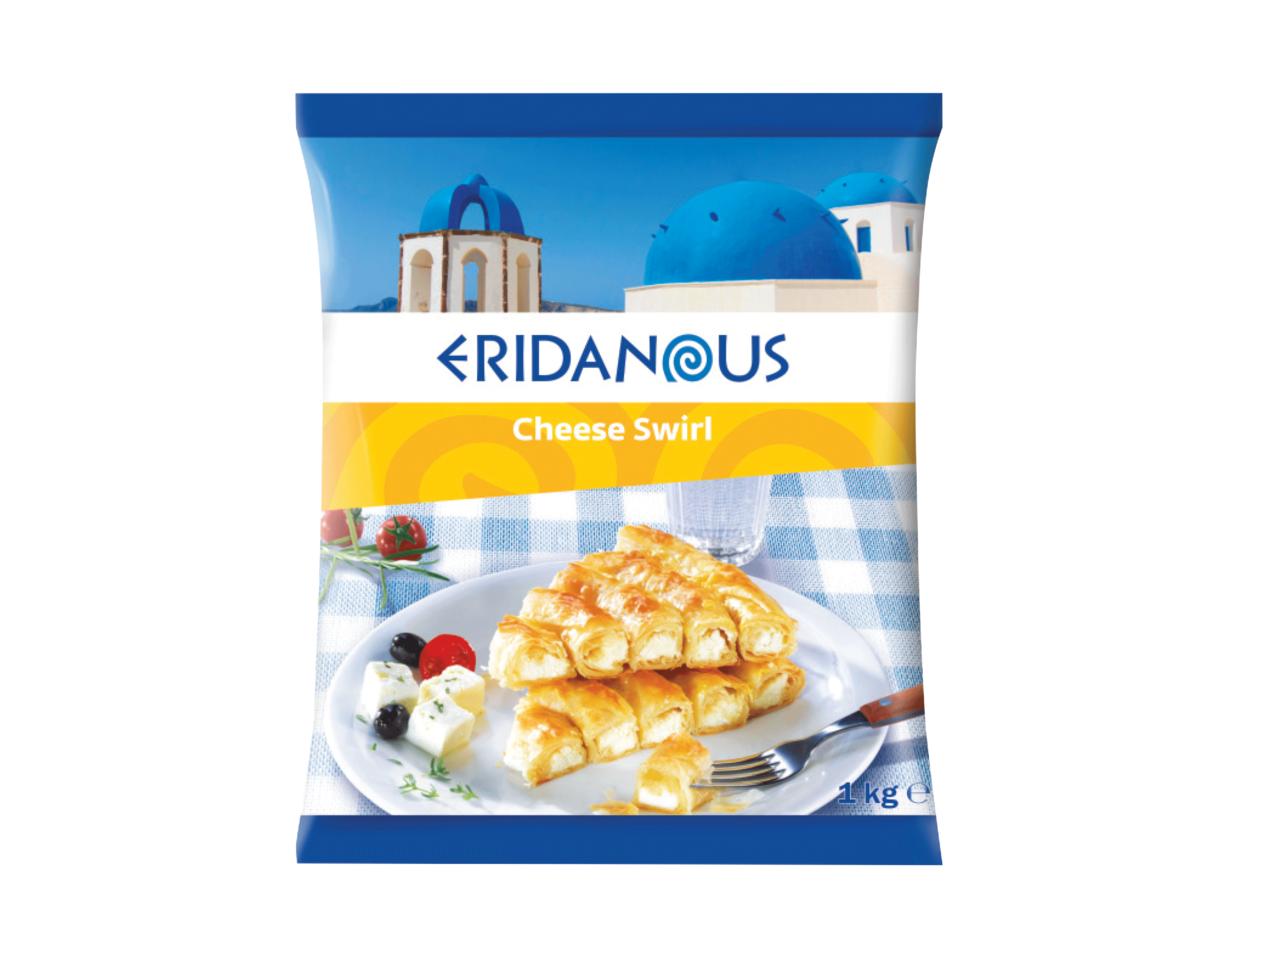 ERIDANOUS(R) Cheese Swirl